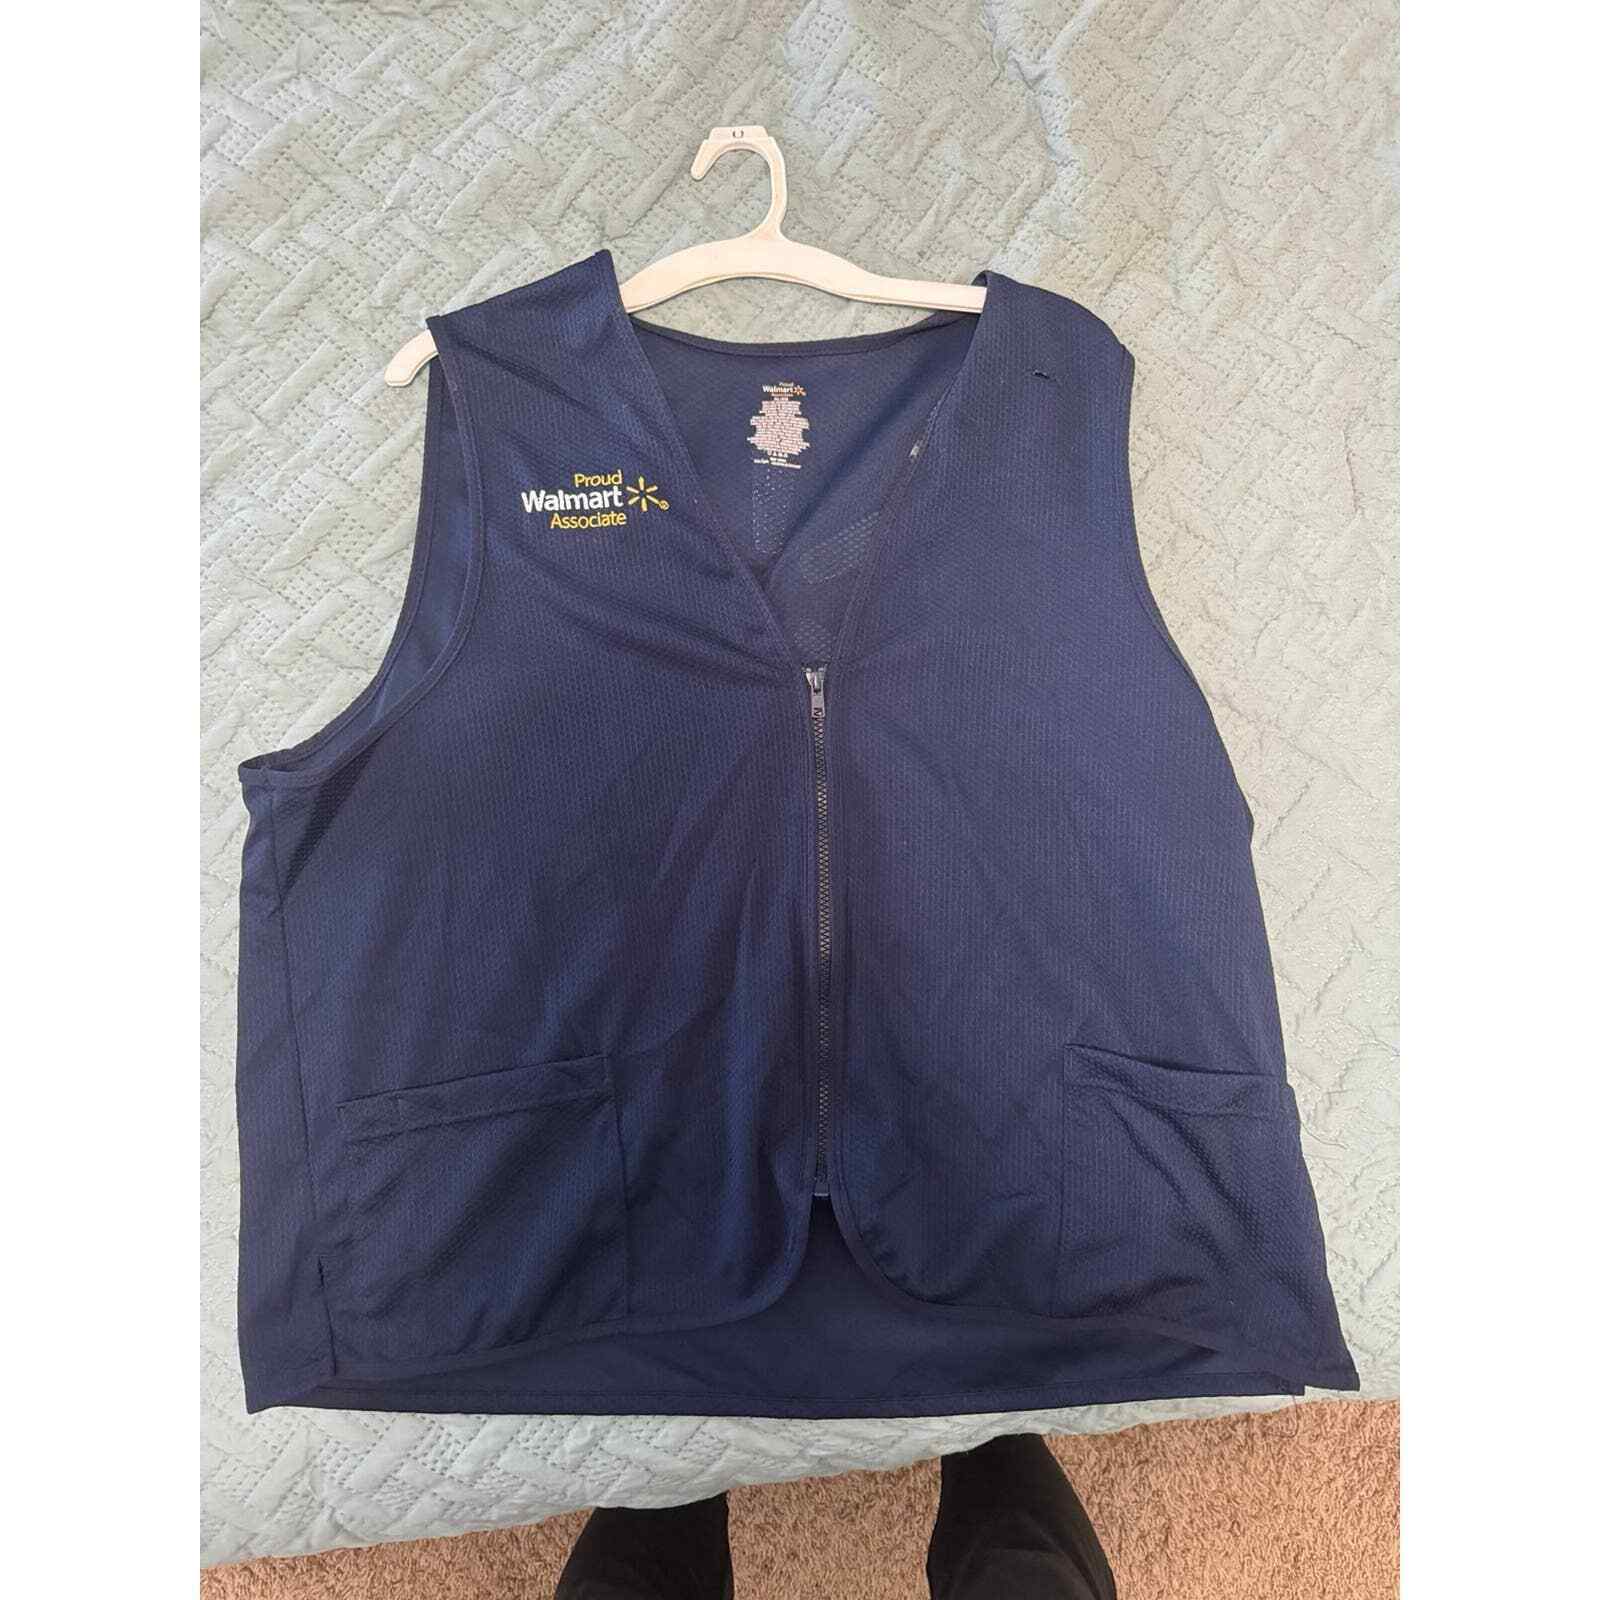 Size XL Blue Walmart Employee Vest - image 1